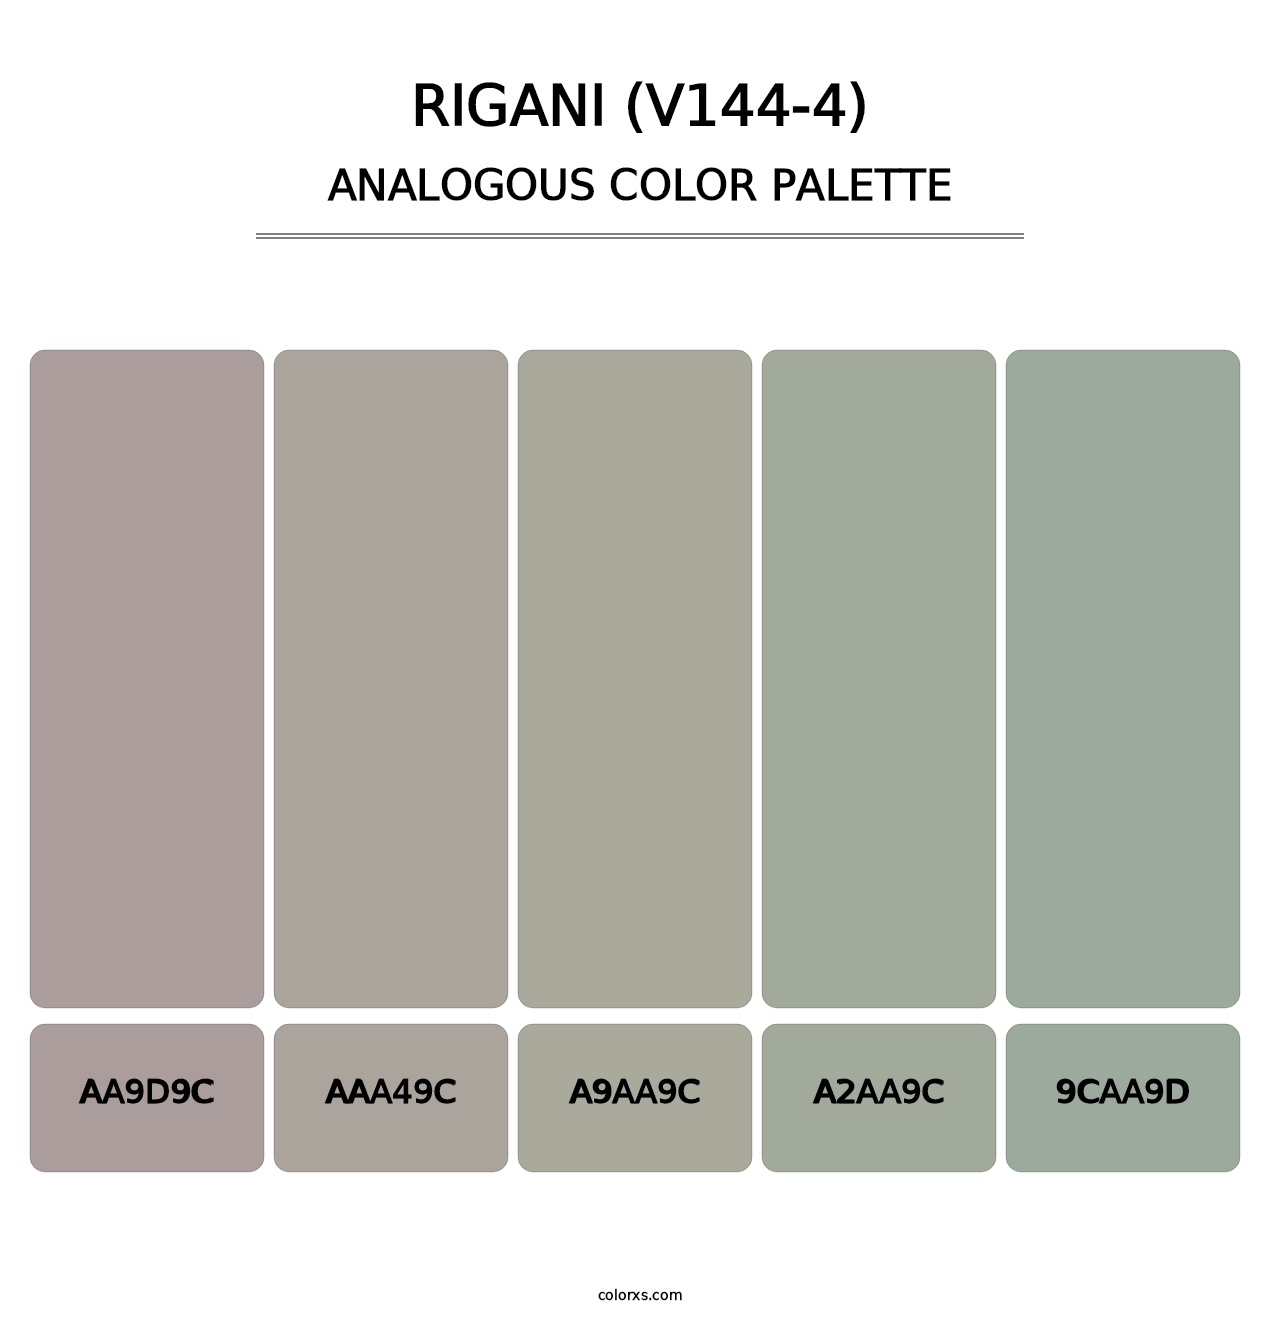 Rigani (V144-4) - Analogous Color Palette